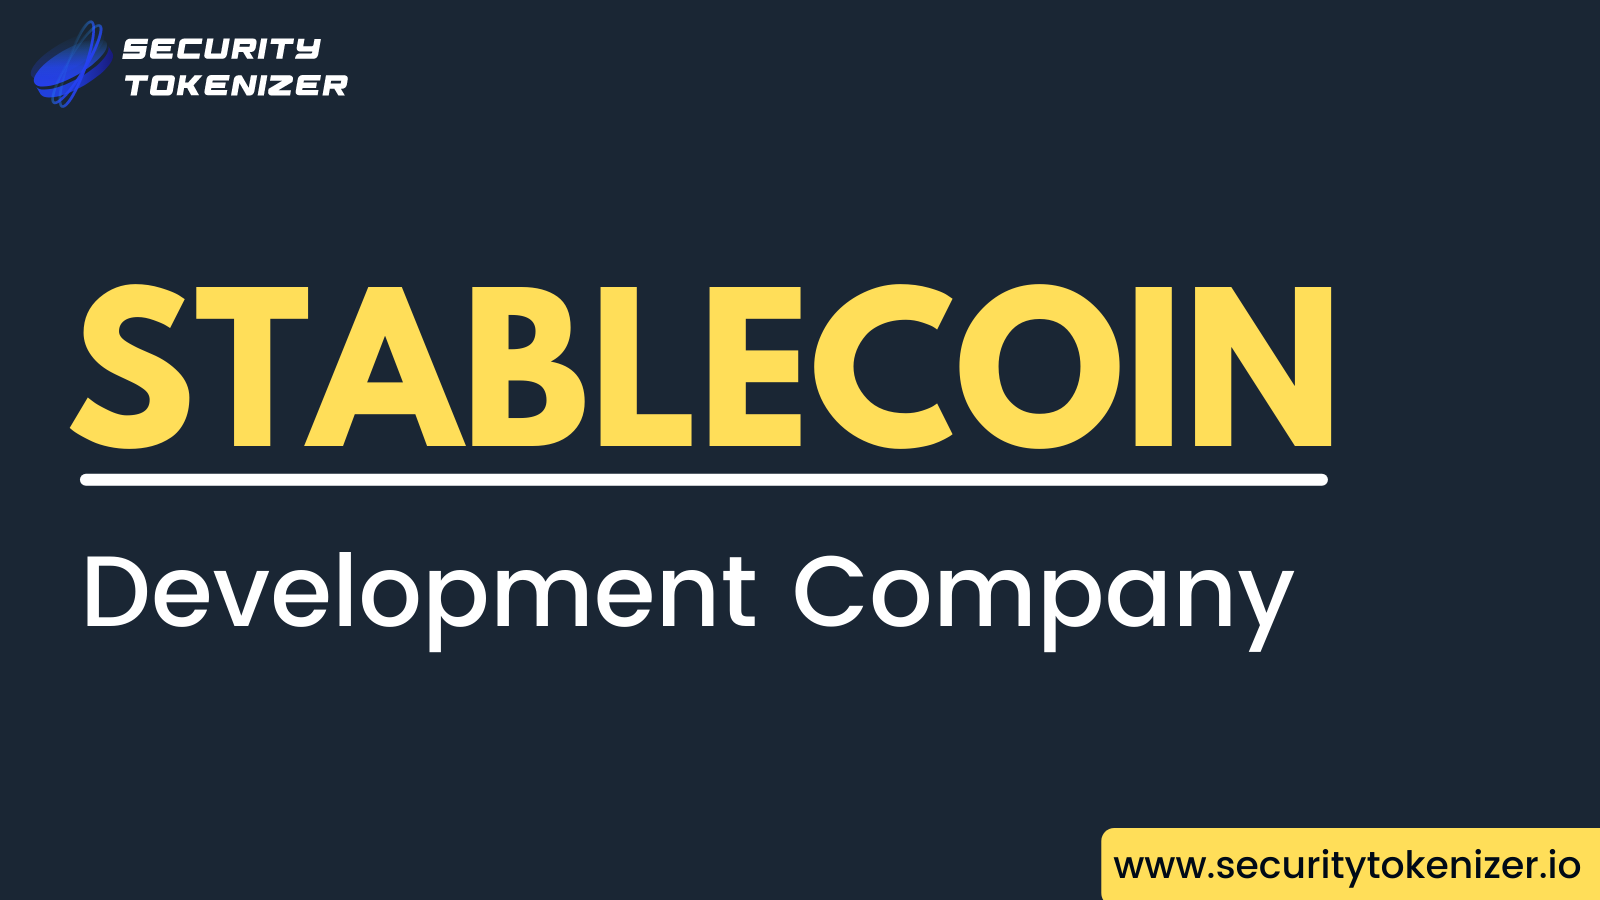 Stablecoin Development Company - Security Tokenizer